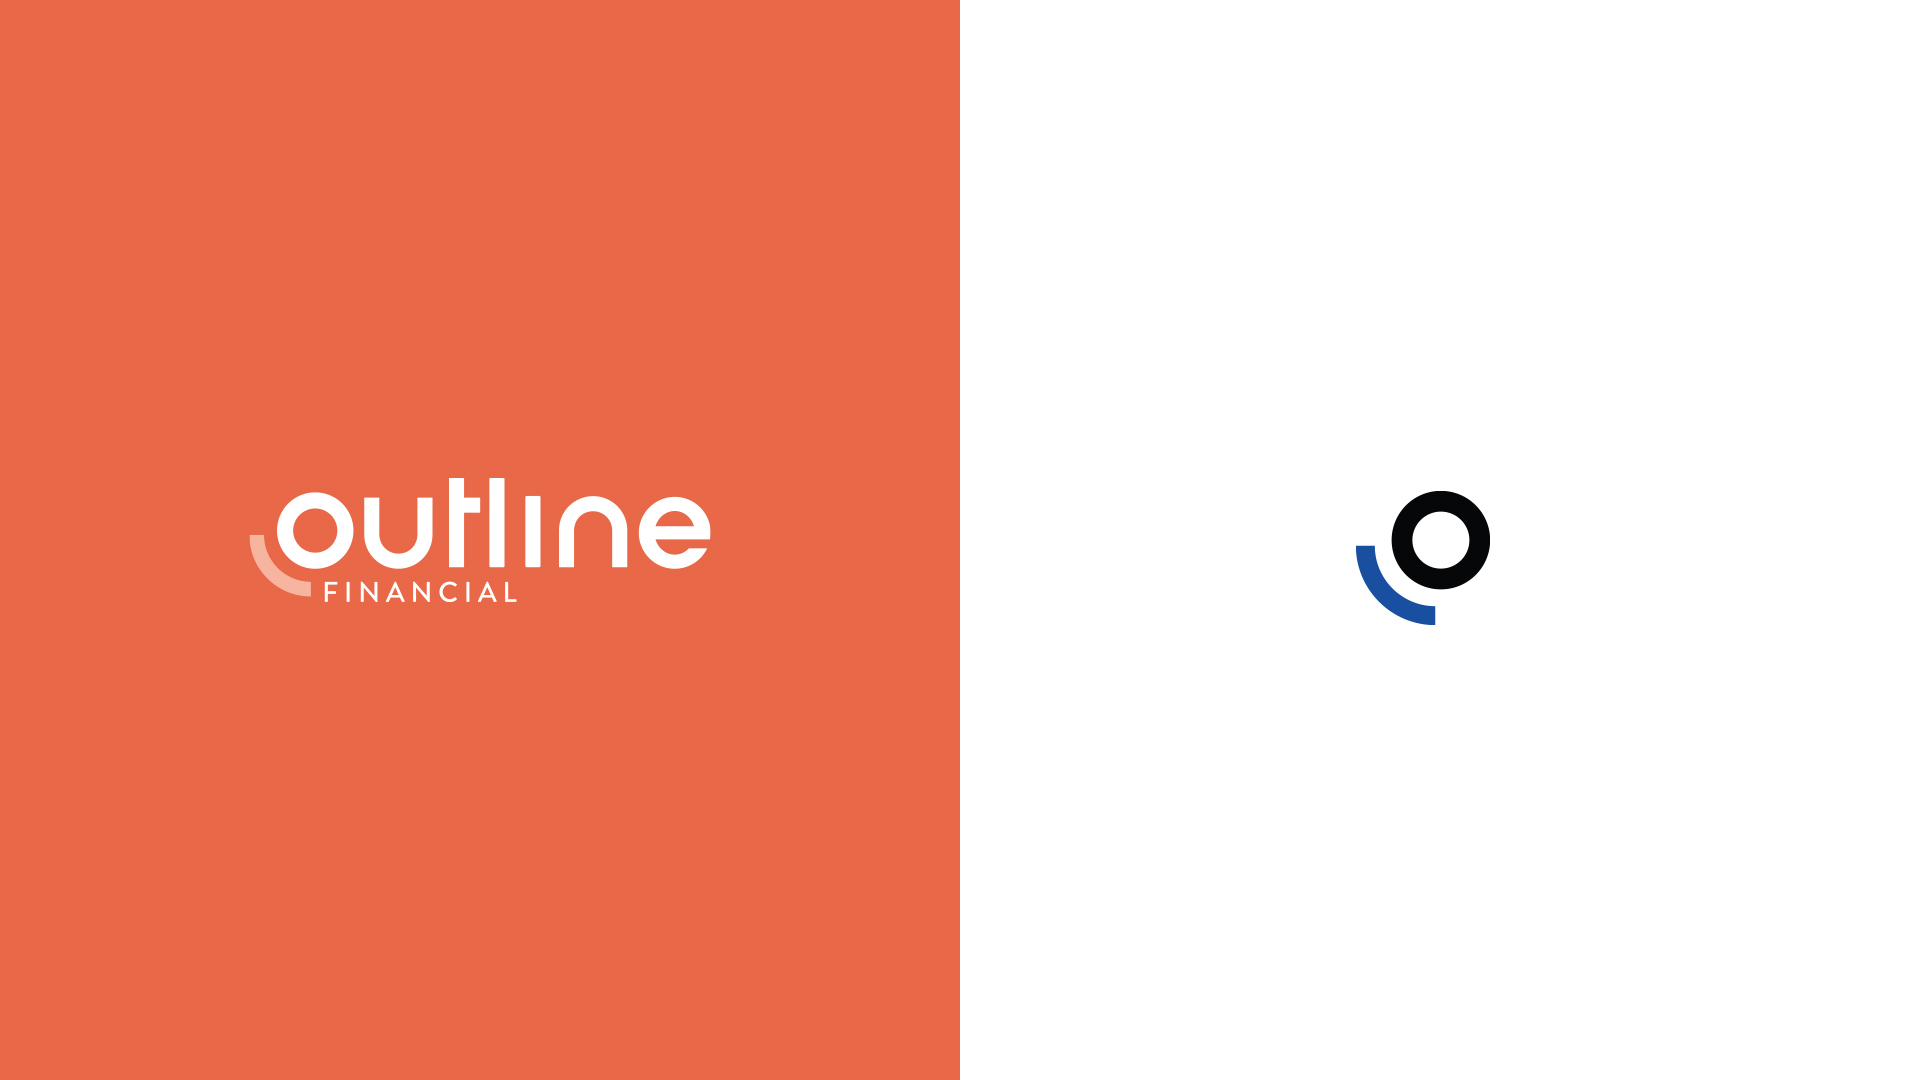 Outline Financial Company Branding